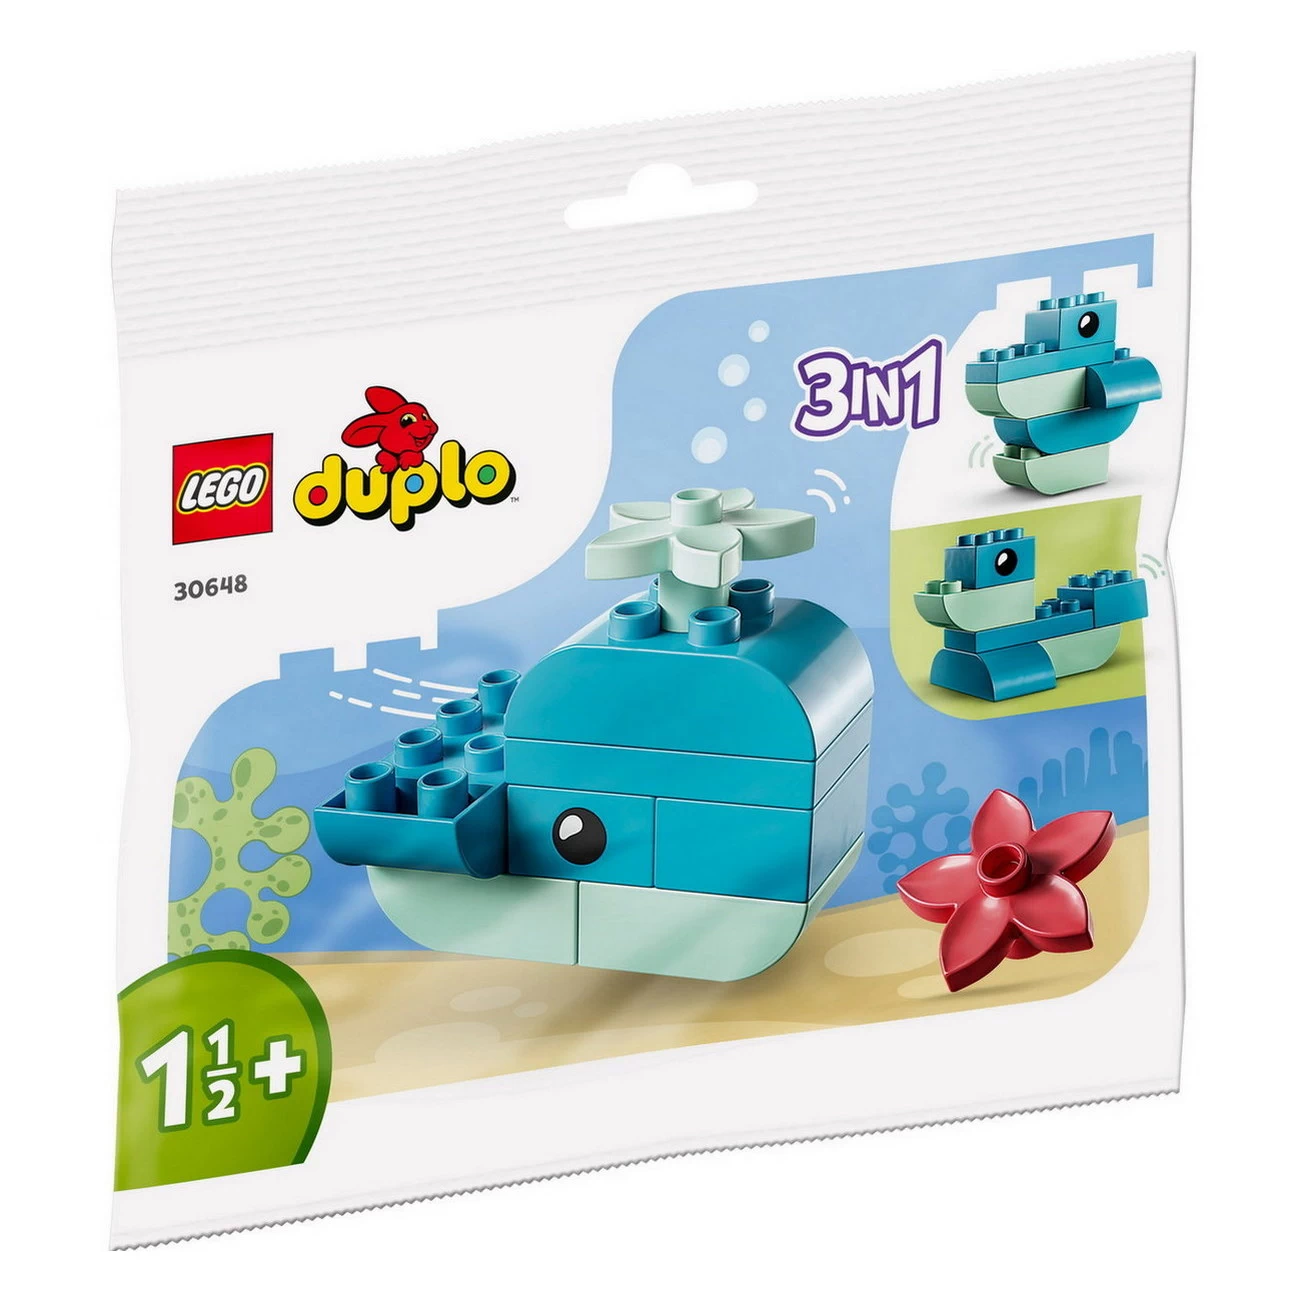 LEGO duplo 30648 - Wal - Polybag